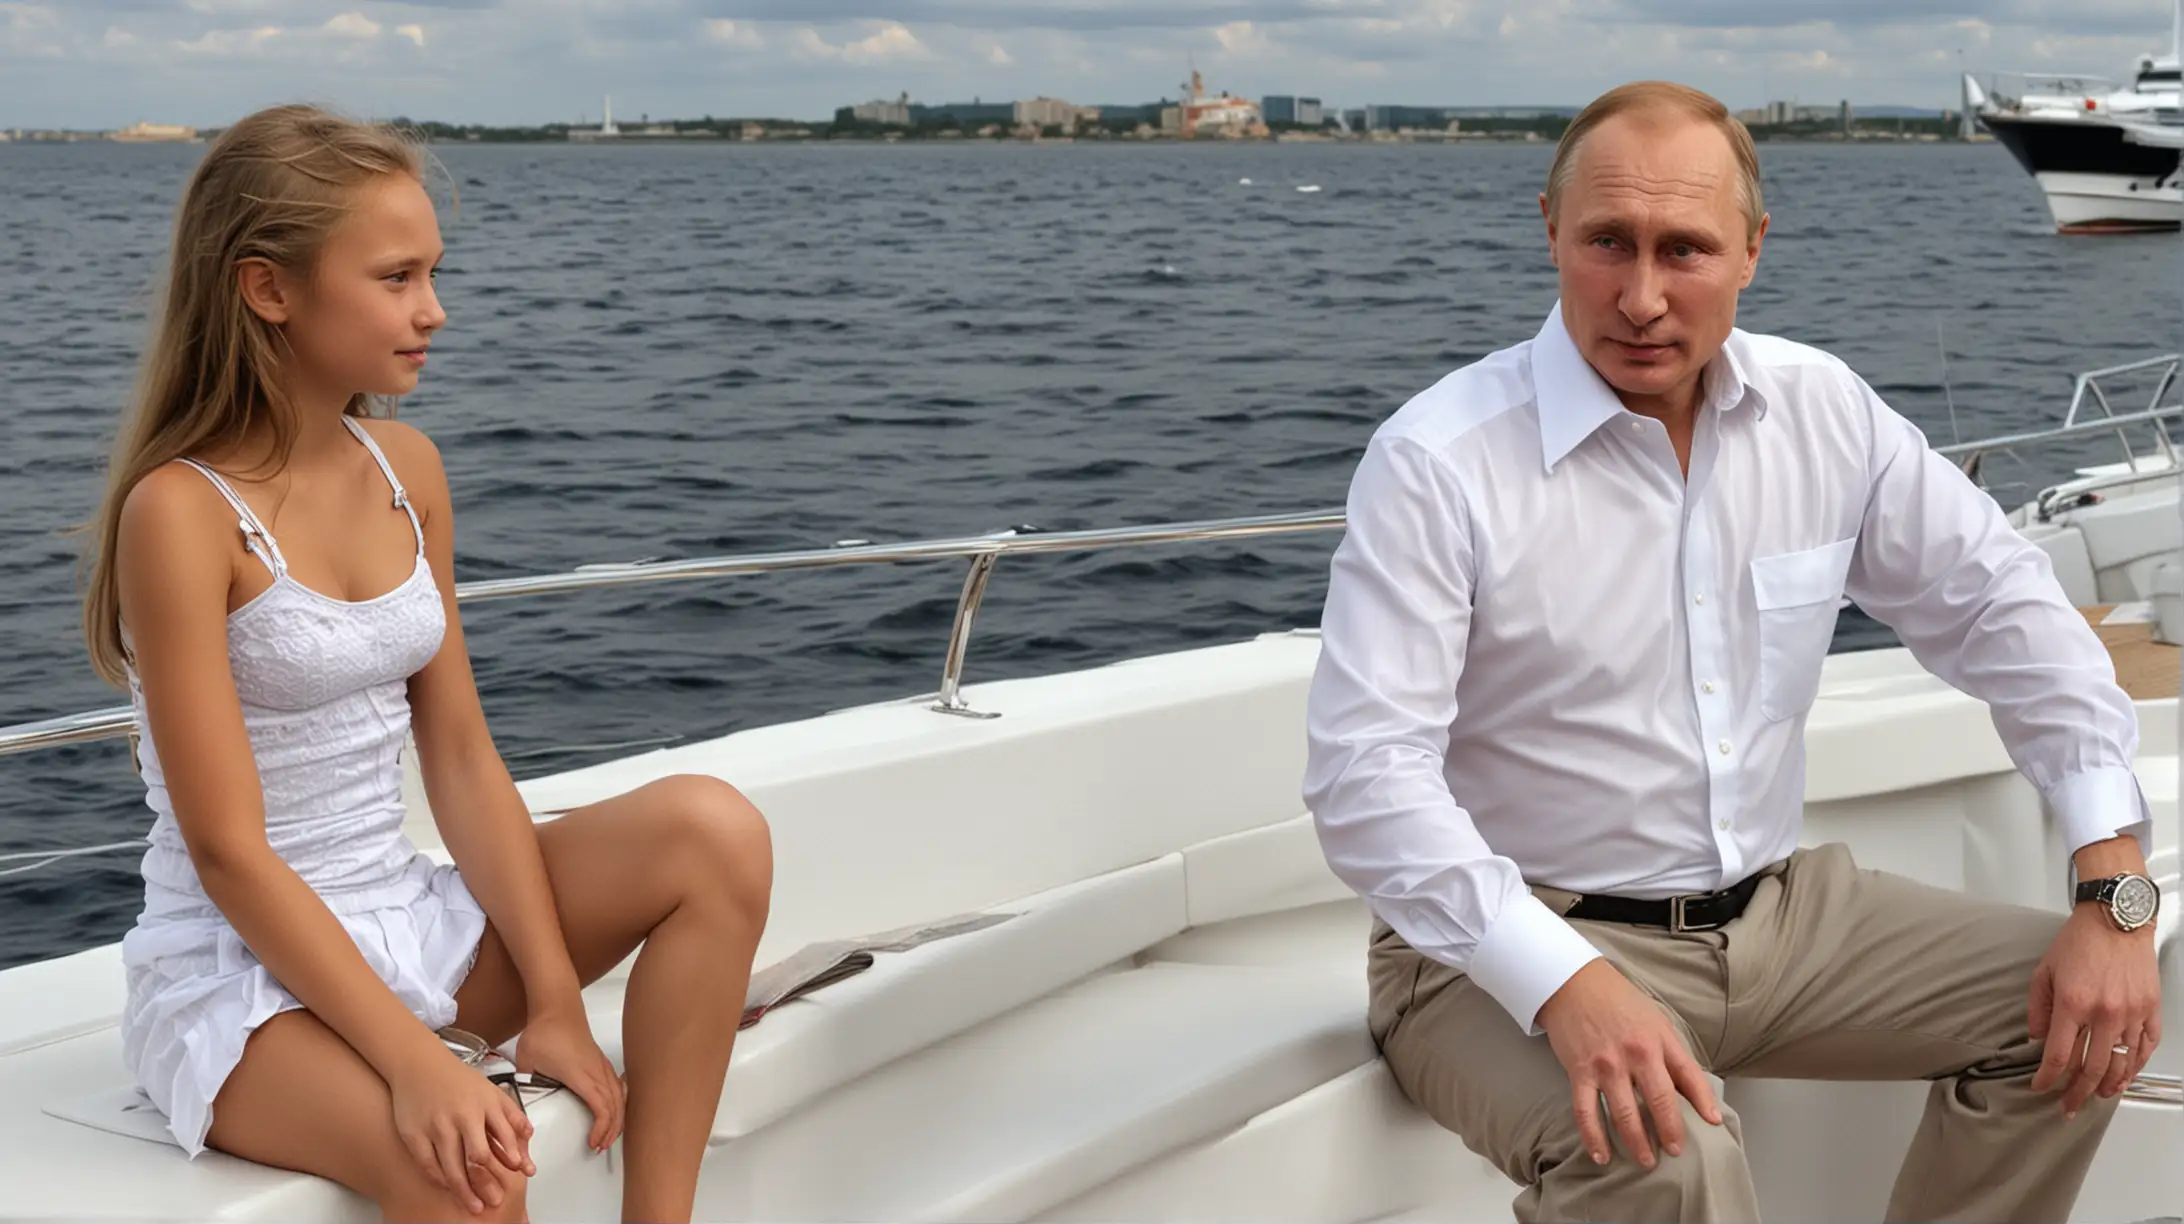 Vladimir Putin Sitting on Yacht With Girl